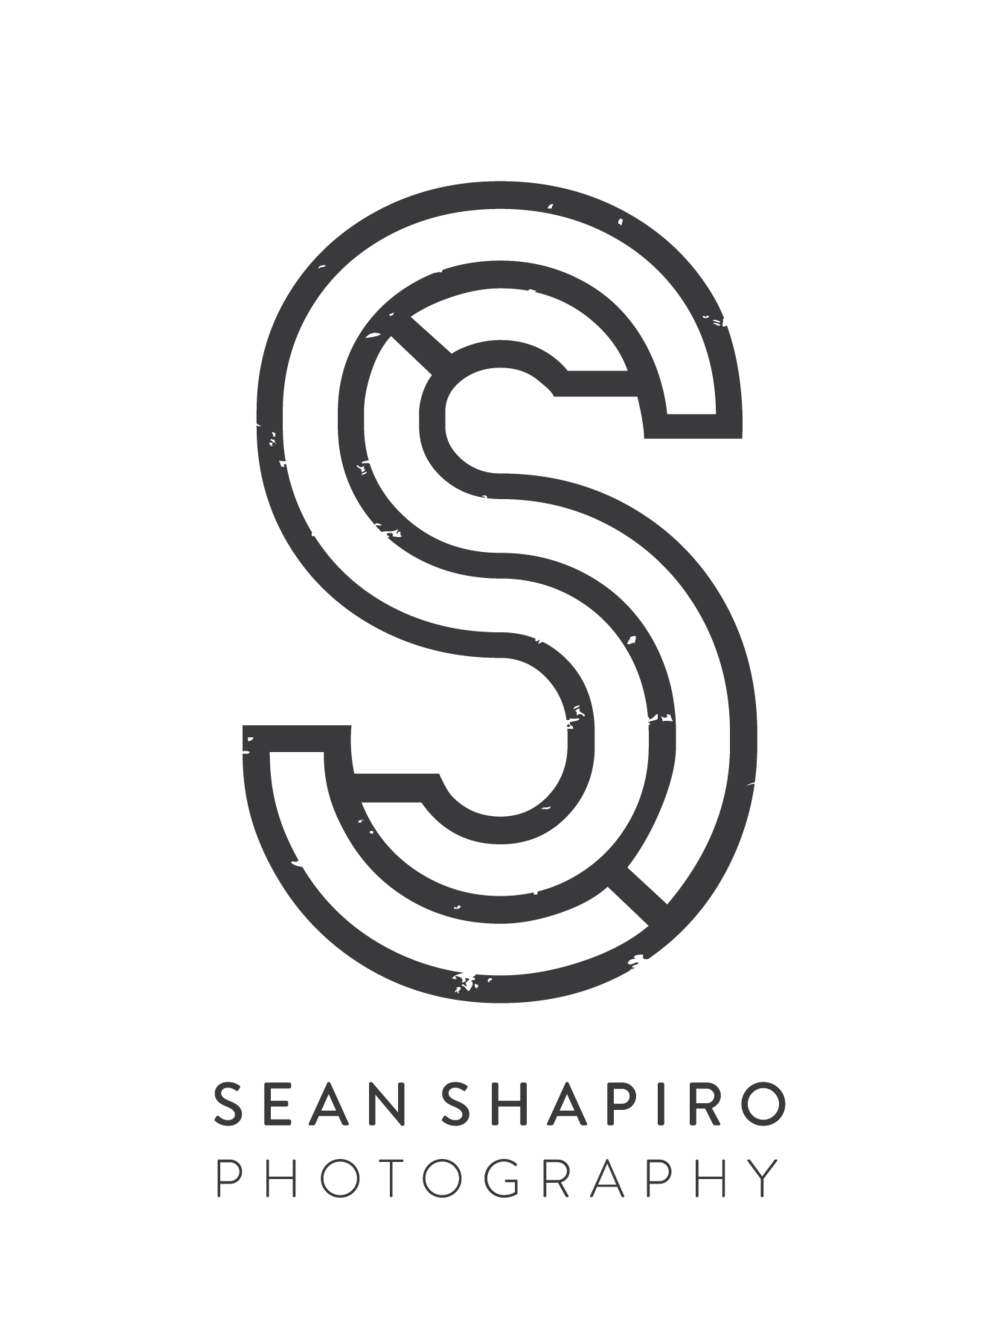 Sean Shapiro Photography